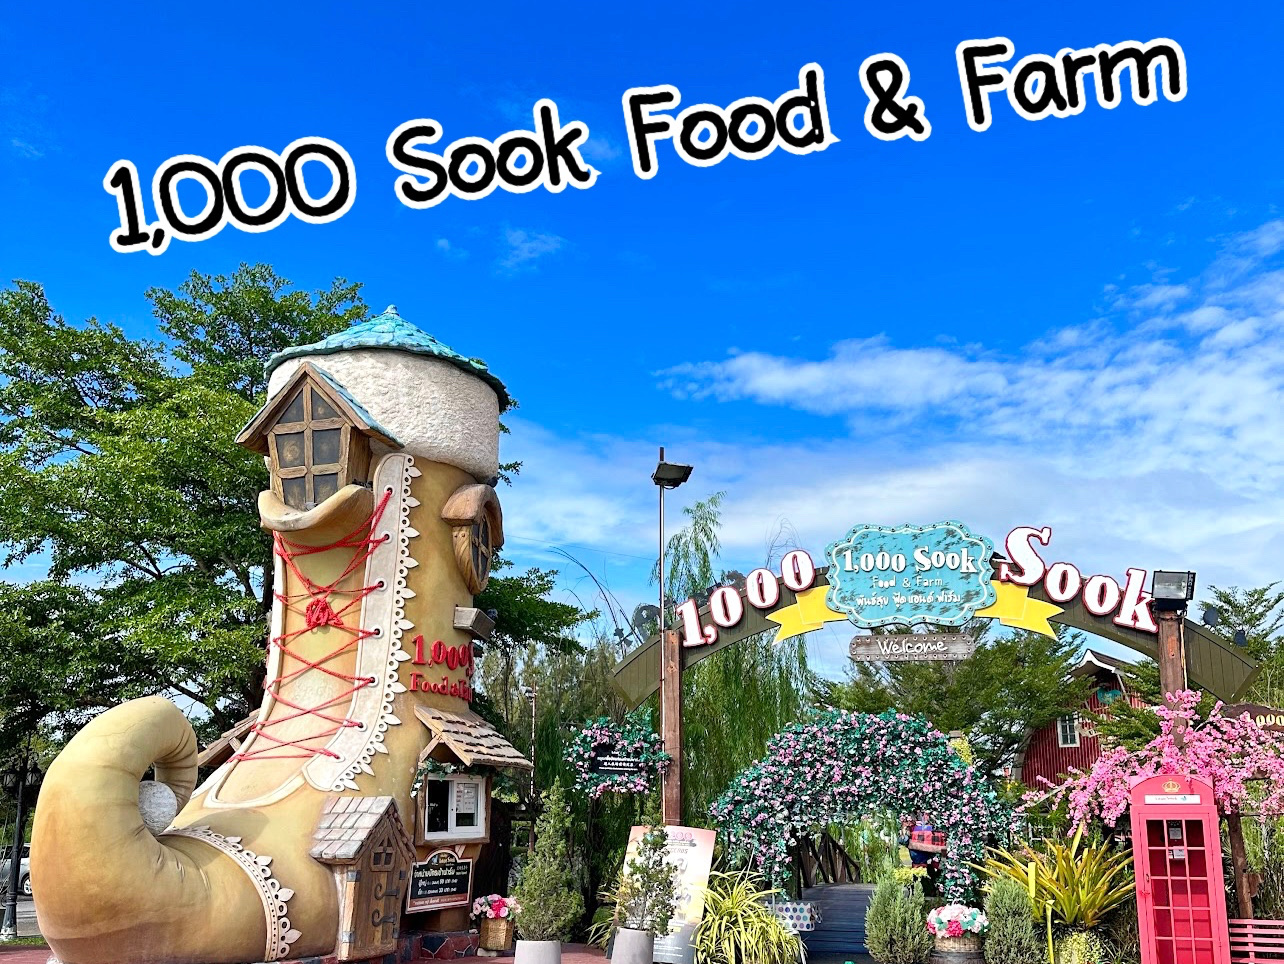 Pansuk Food & Farm,一个地方旅行,到处都是。